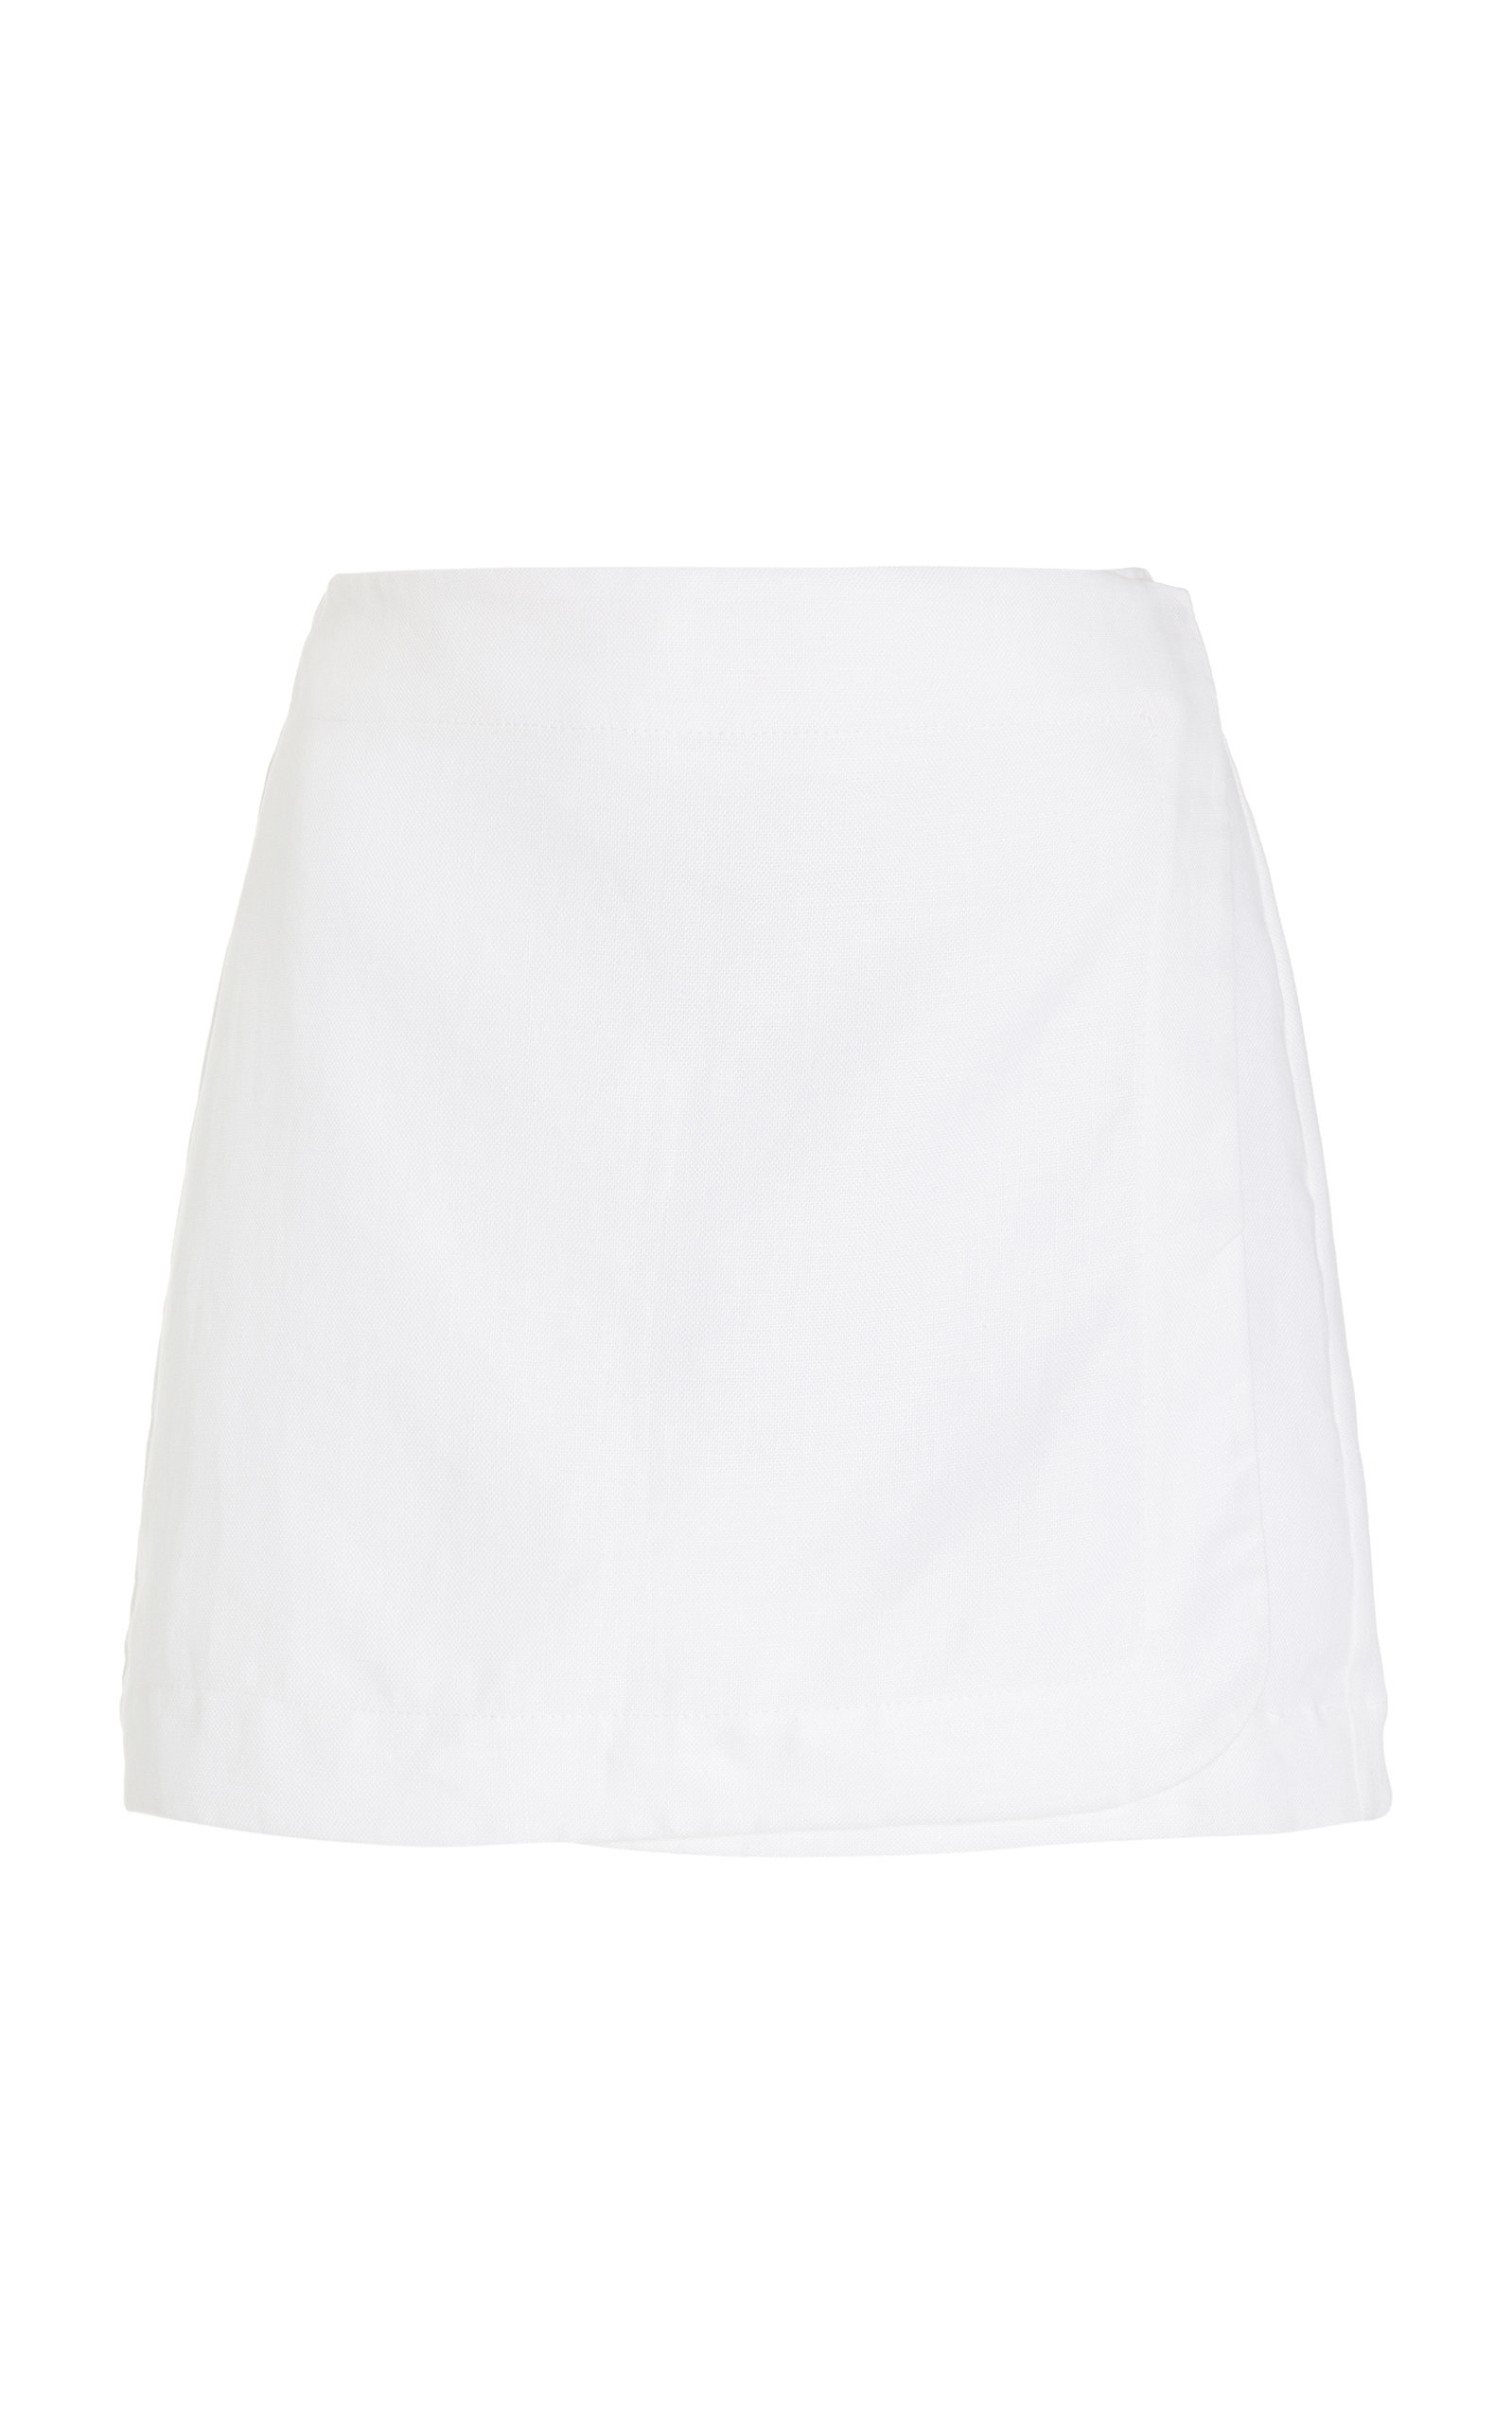 BONDI BORN Women's Brighton Mini Skirt